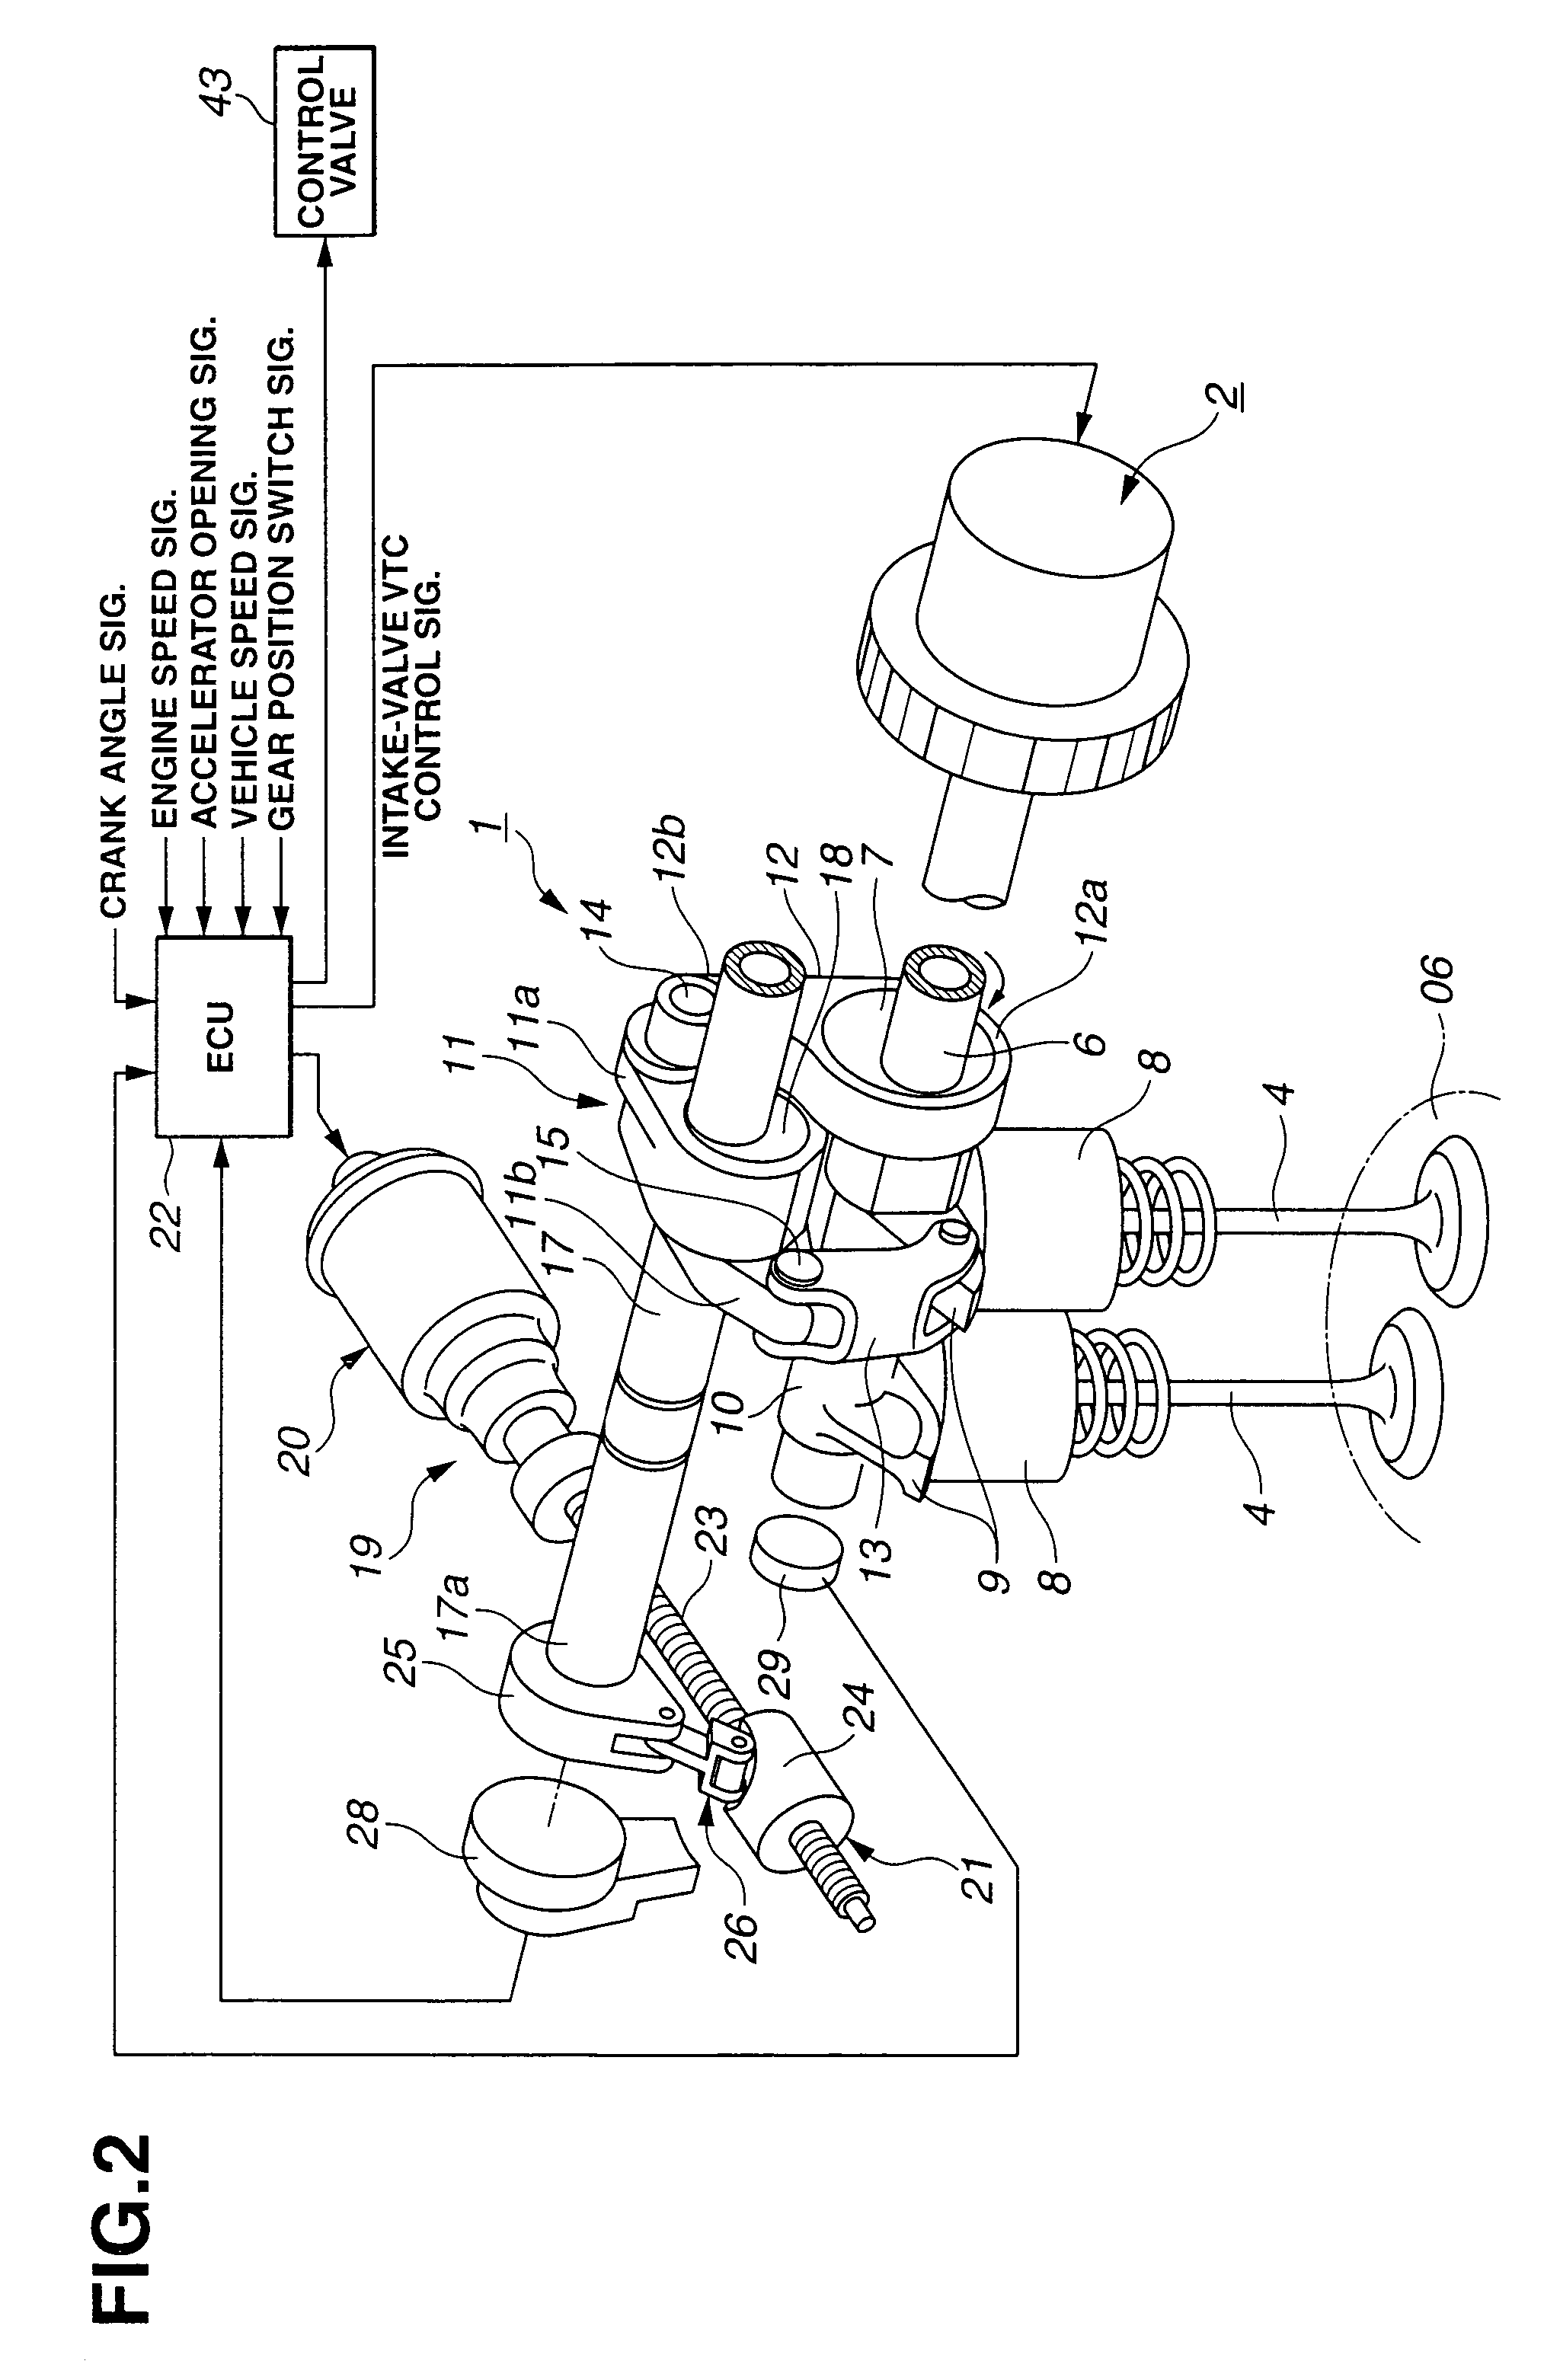 Cylinder cutoff control apparatus of internal combustion engine